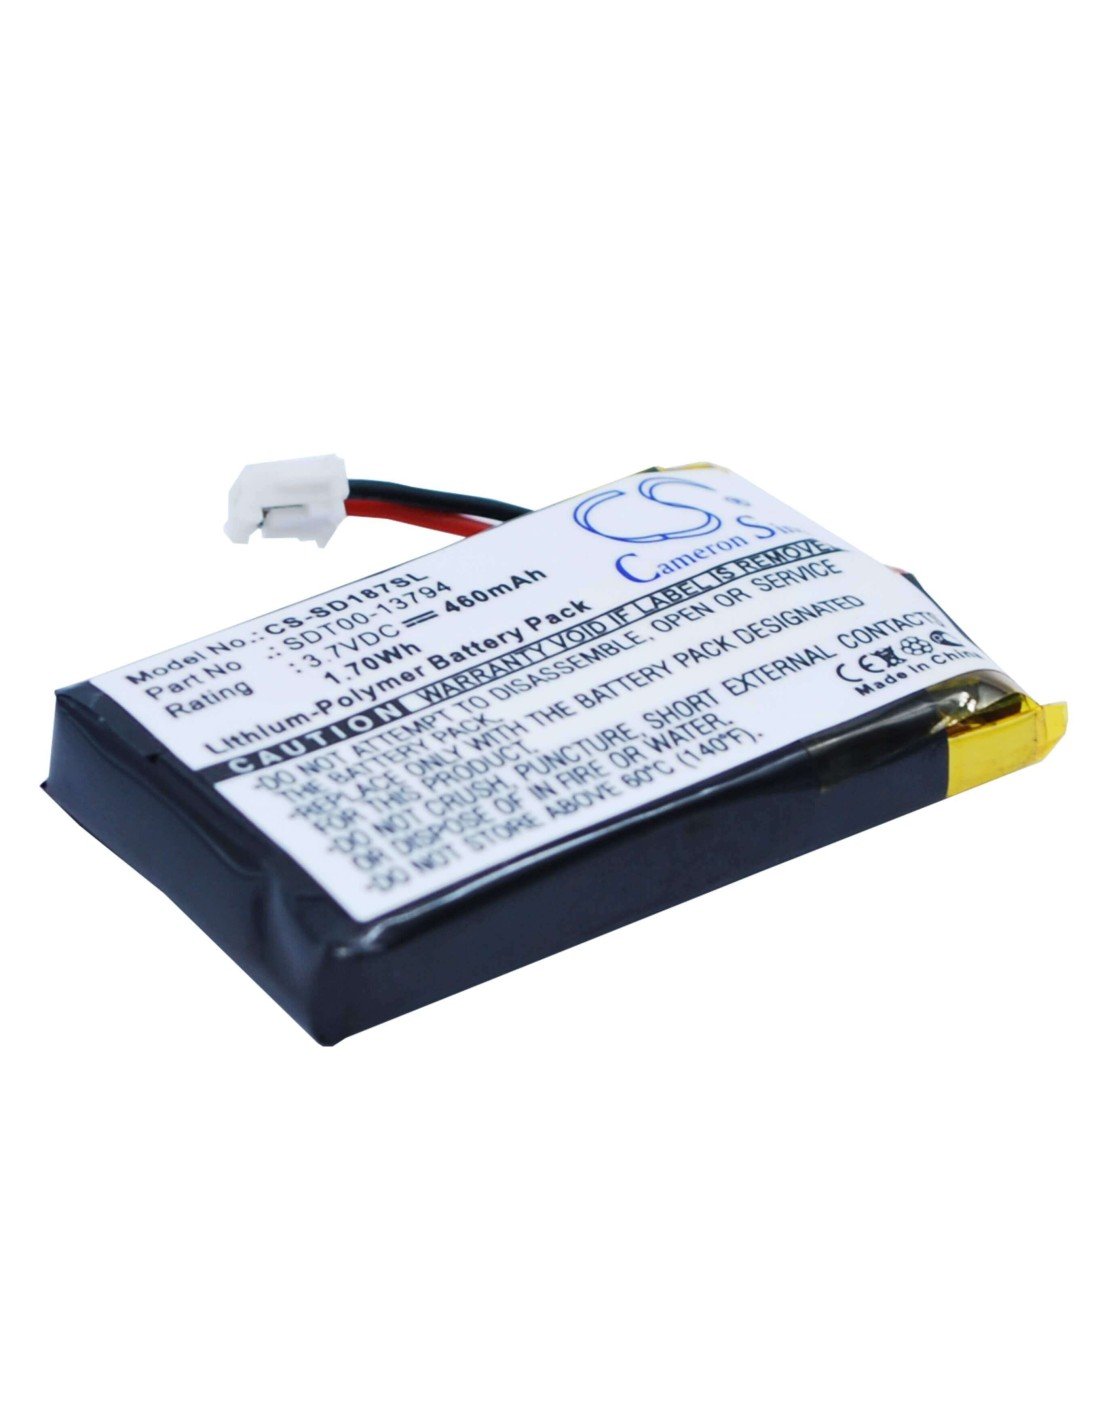 Battery for Sportdog Sd-2525 Prohunter Transmitter, Sd-1875 Remote Beeper 3.7V, 460mAh - 1.70Wh